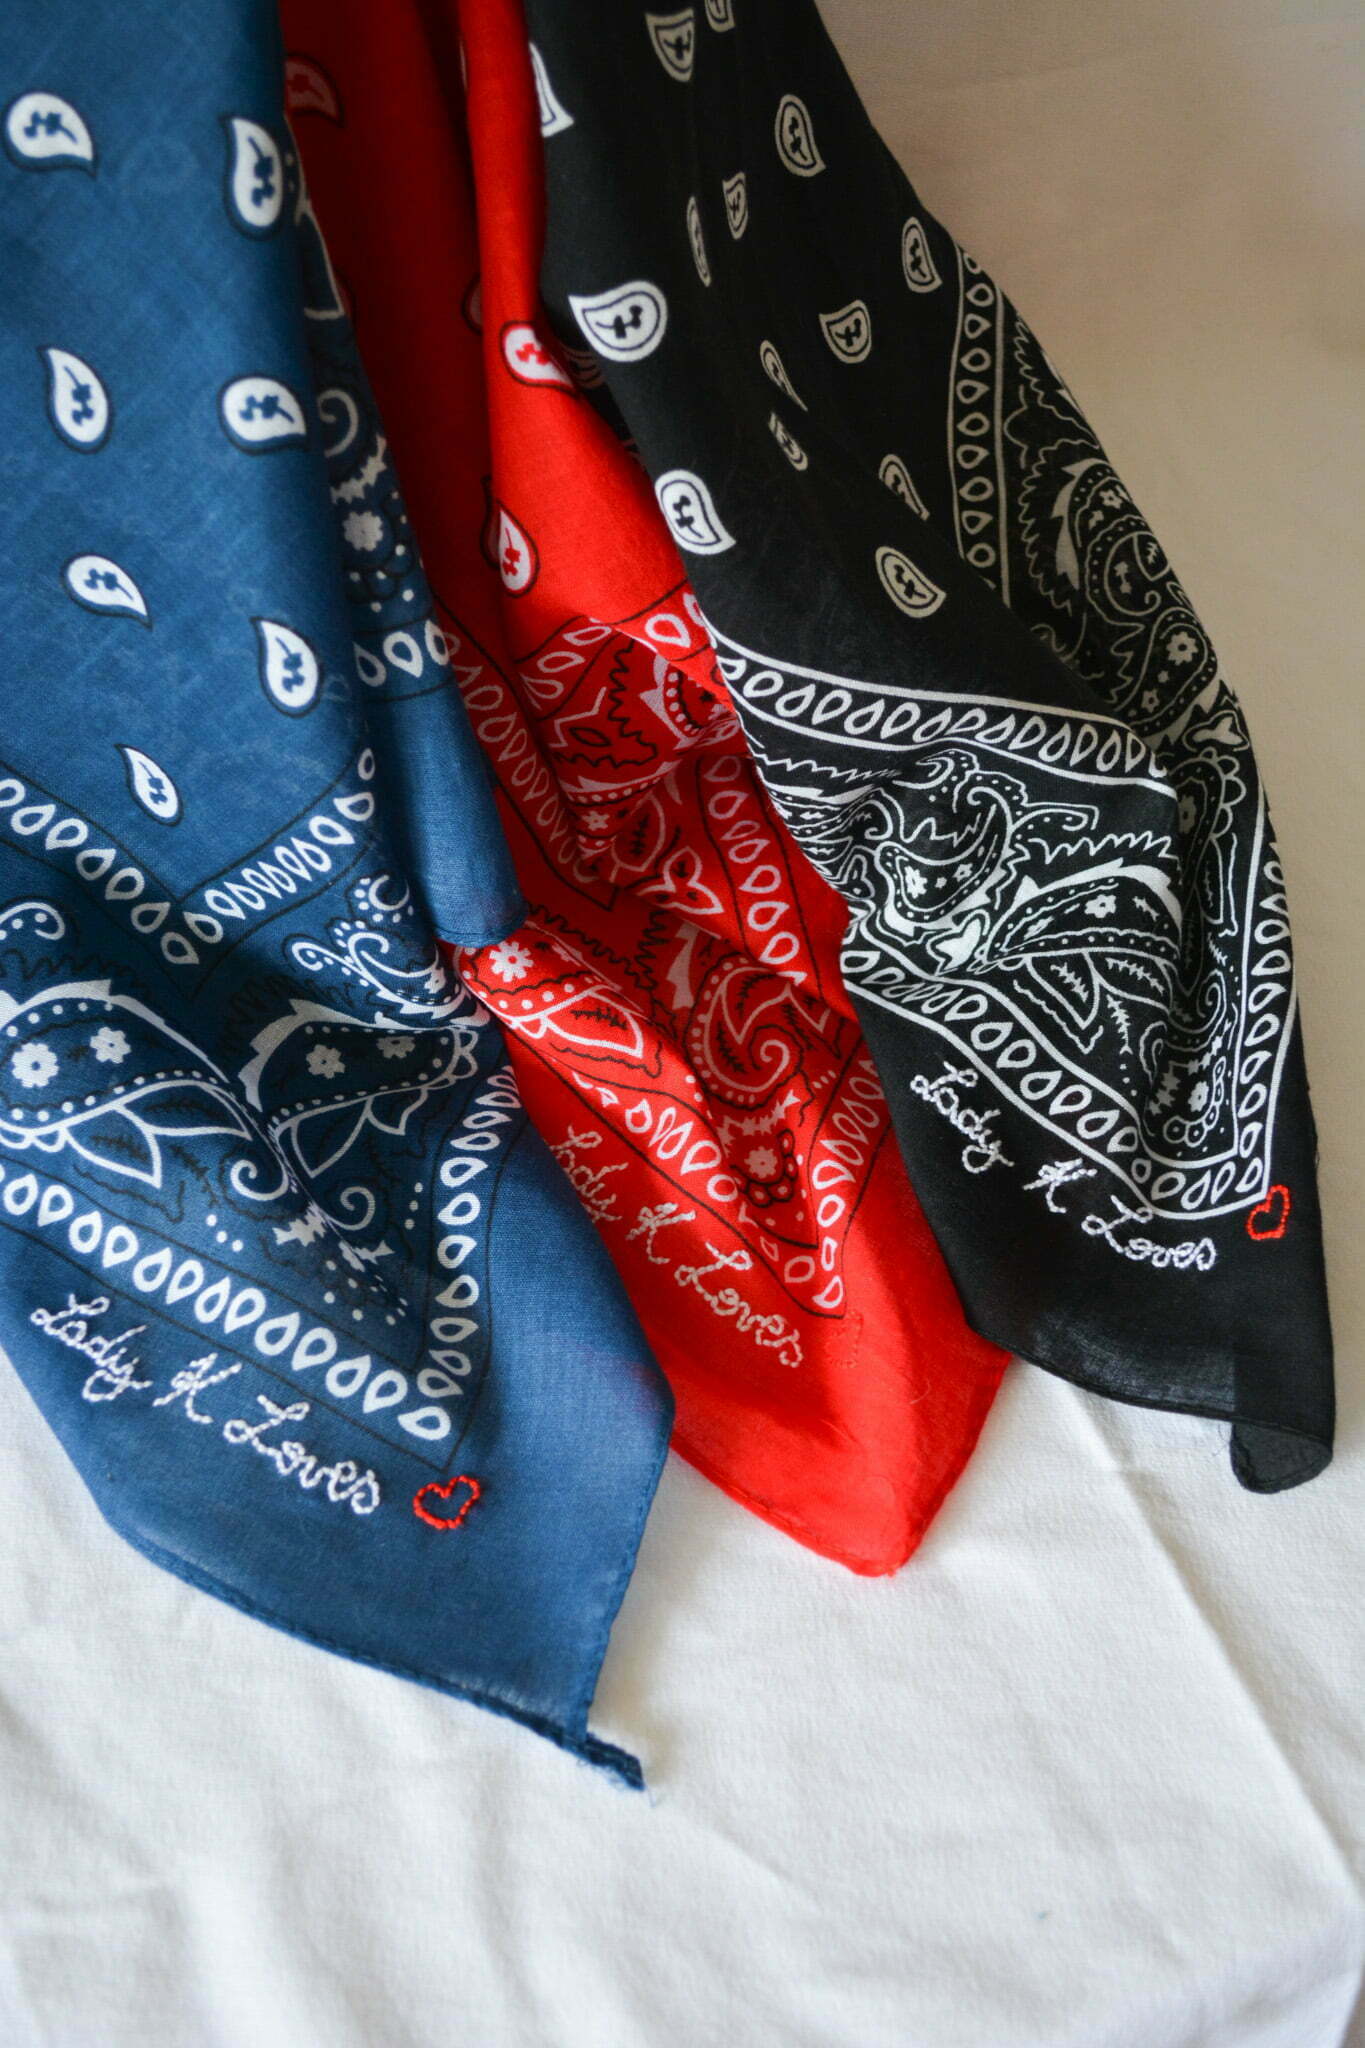 three paisley bandanas draped together red nevy blue black